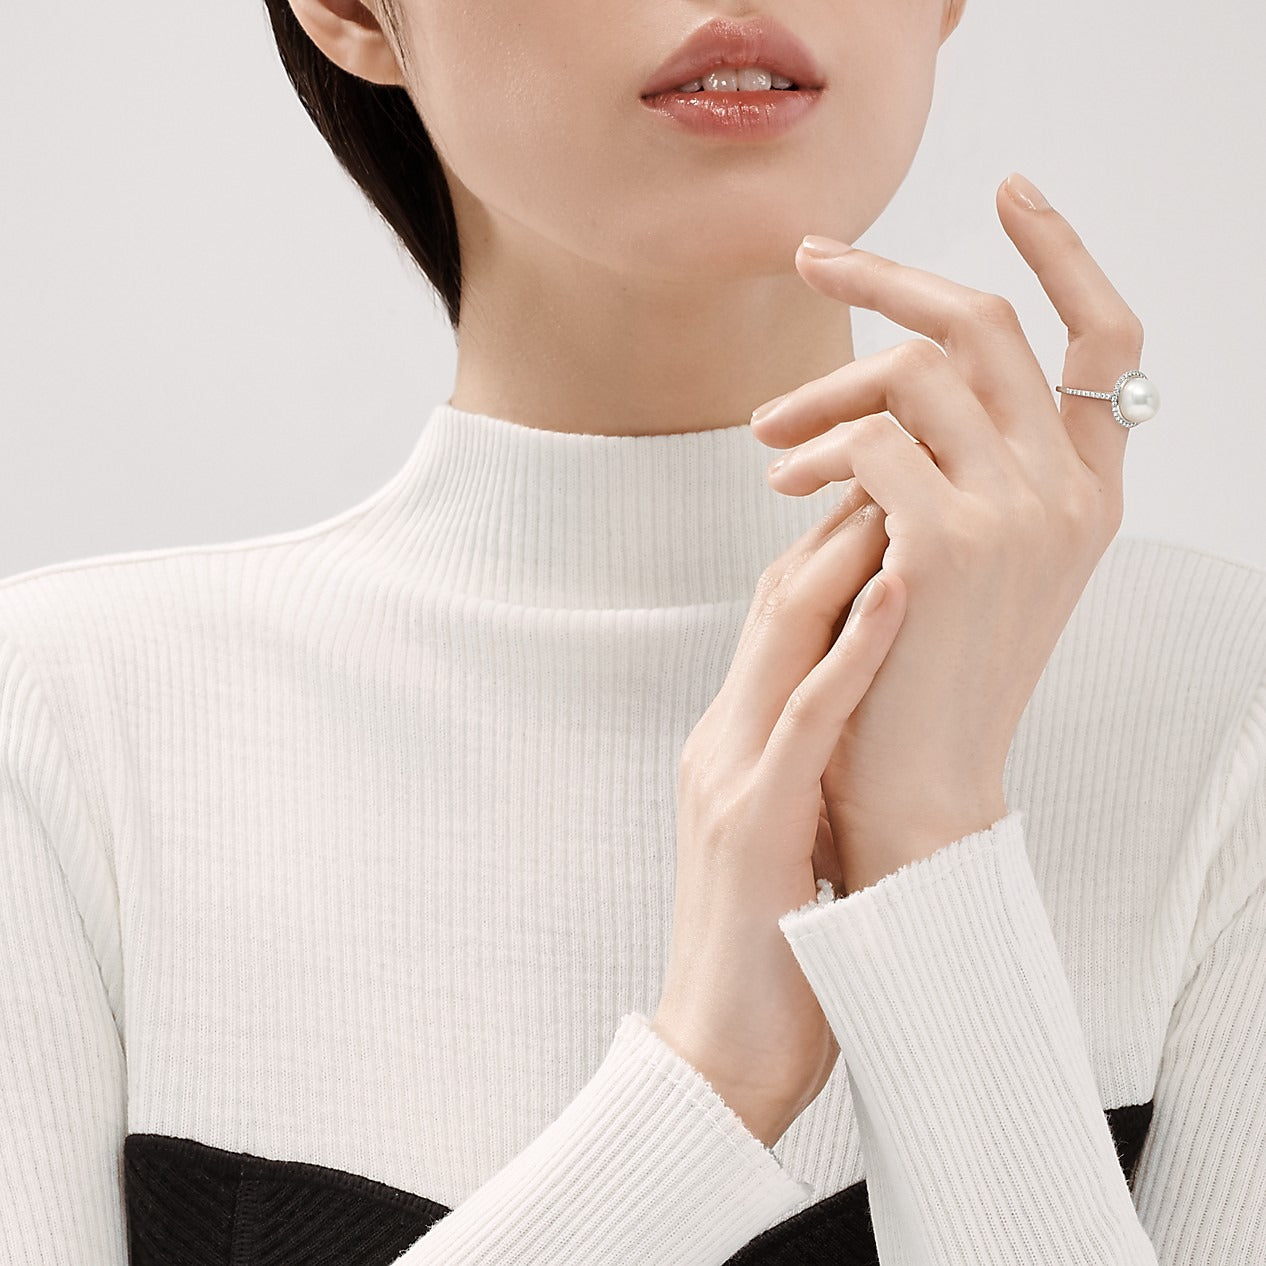 Model showcasing Tiffany's South Sea Noble Ring